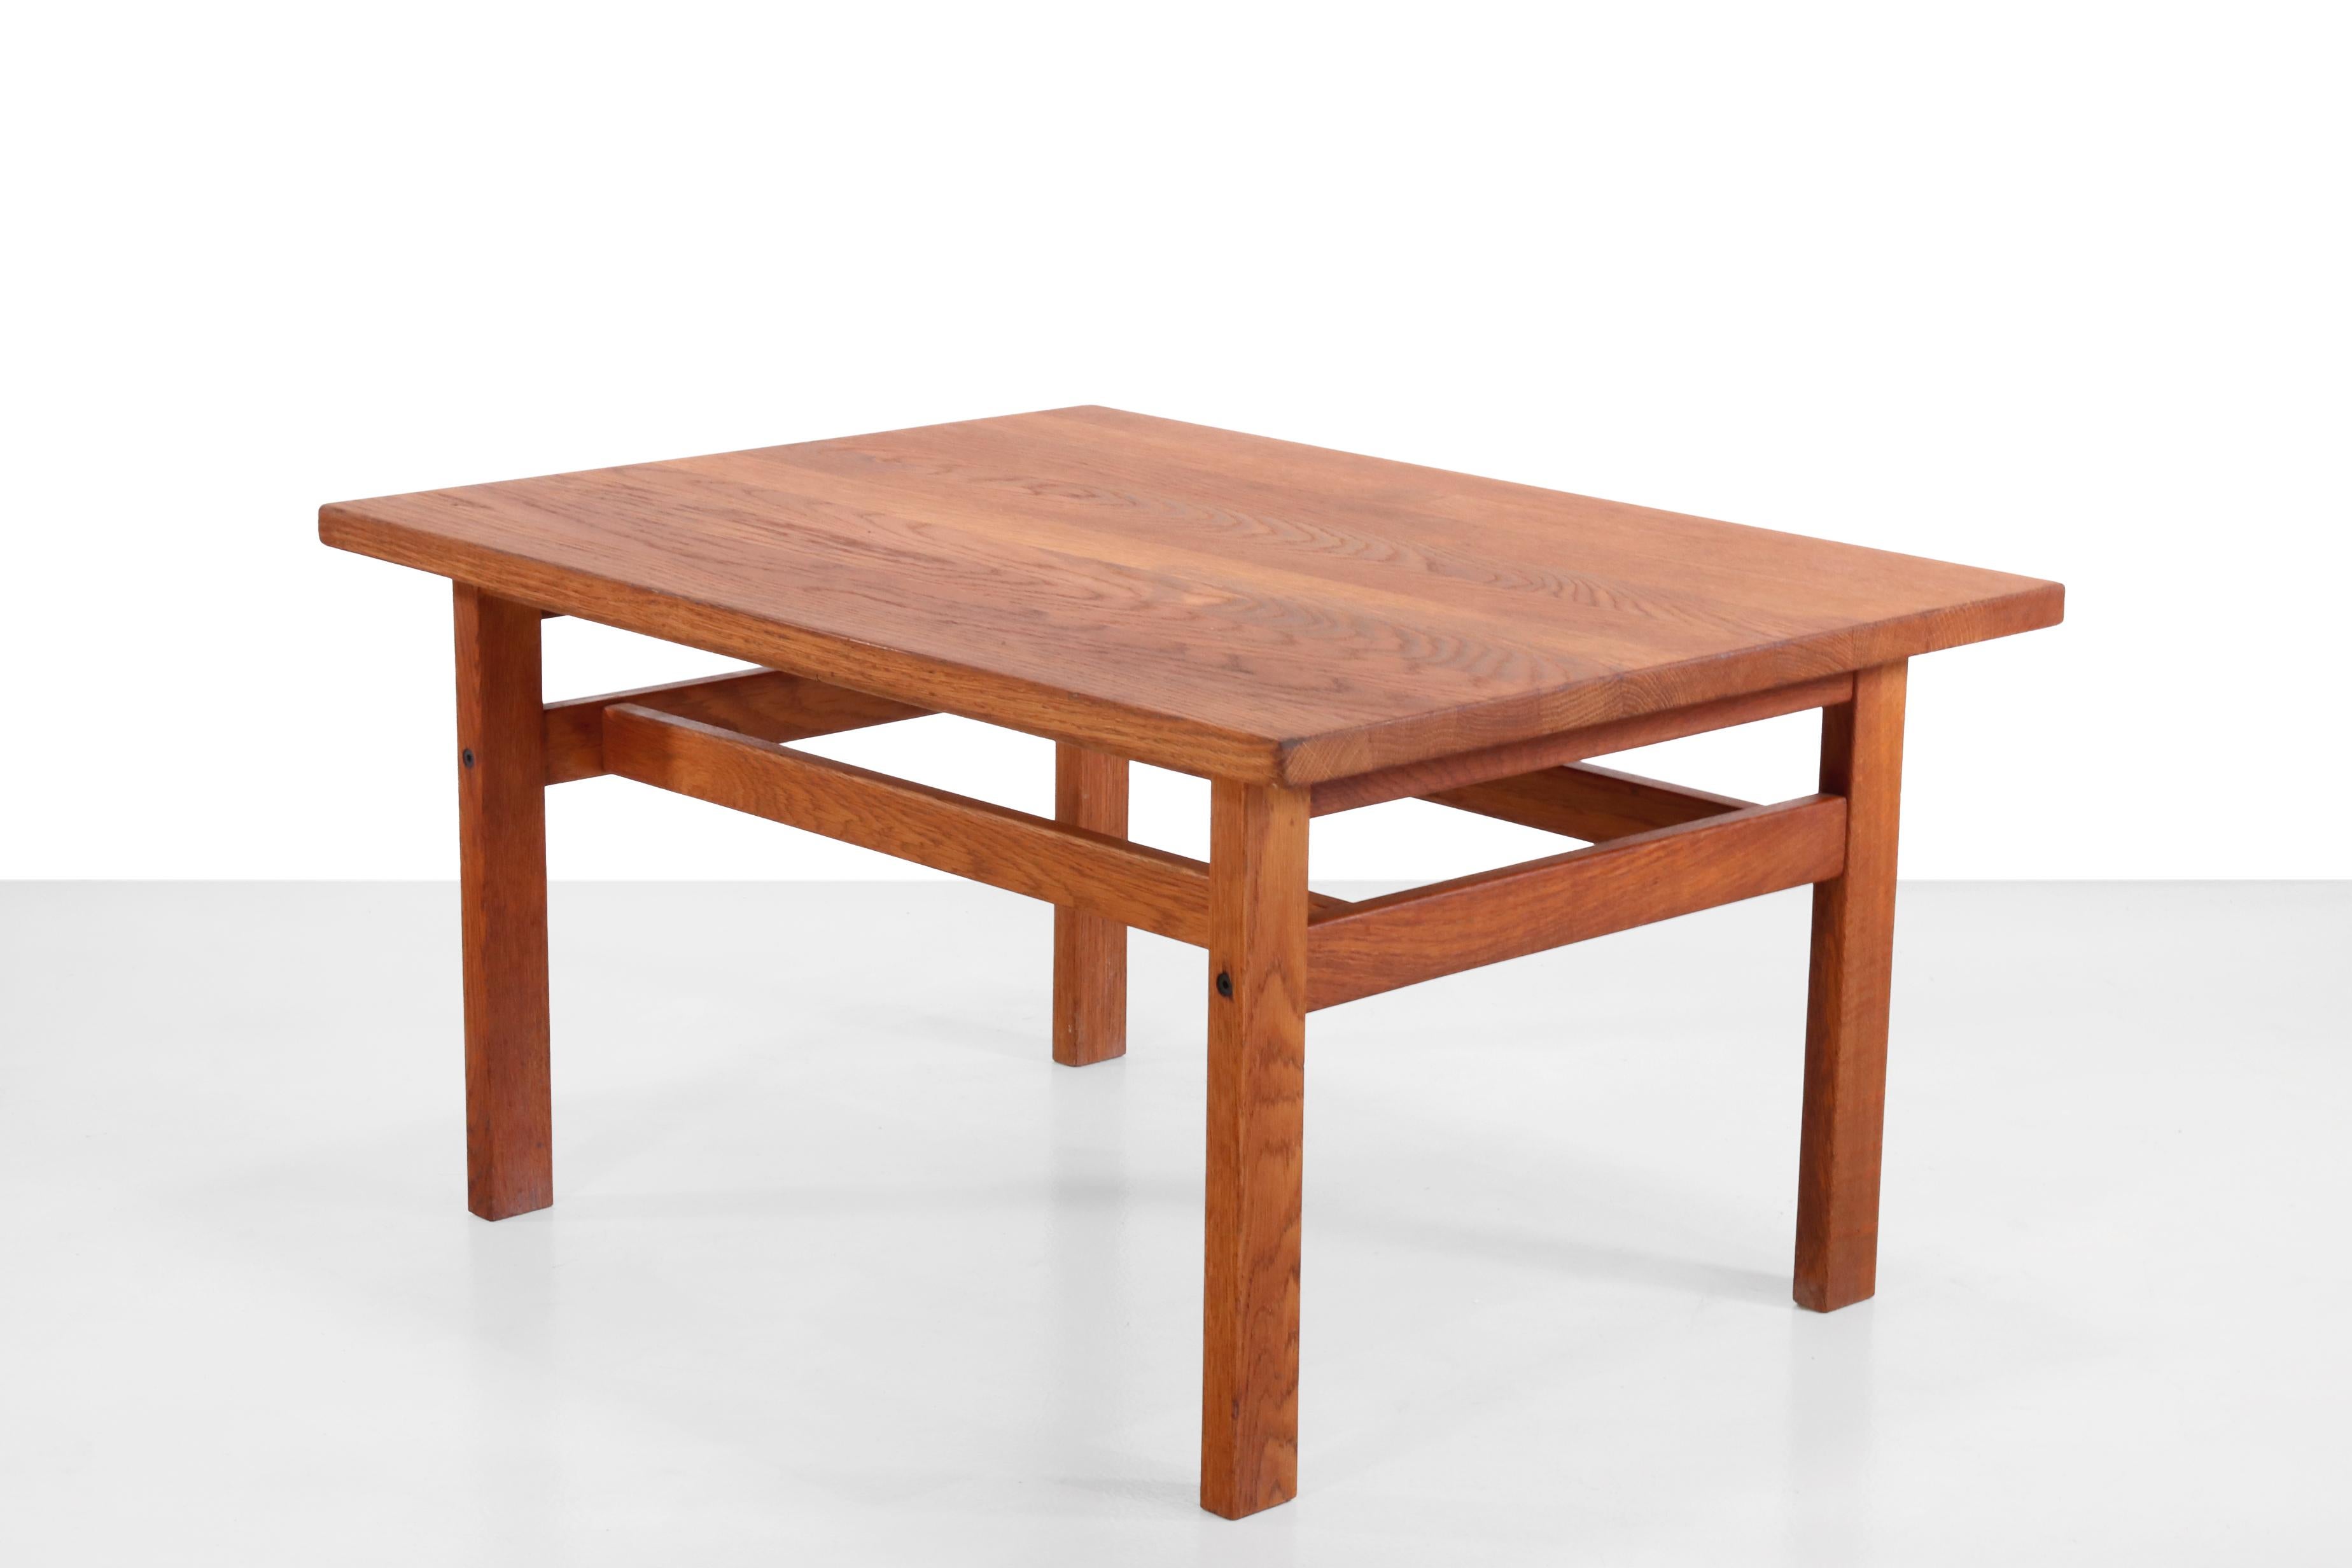 Scandinavian Modern Solid Oak Coffee Table or Sidetable by FDB Mobler Model No.240, 1950's Denmark For Sale